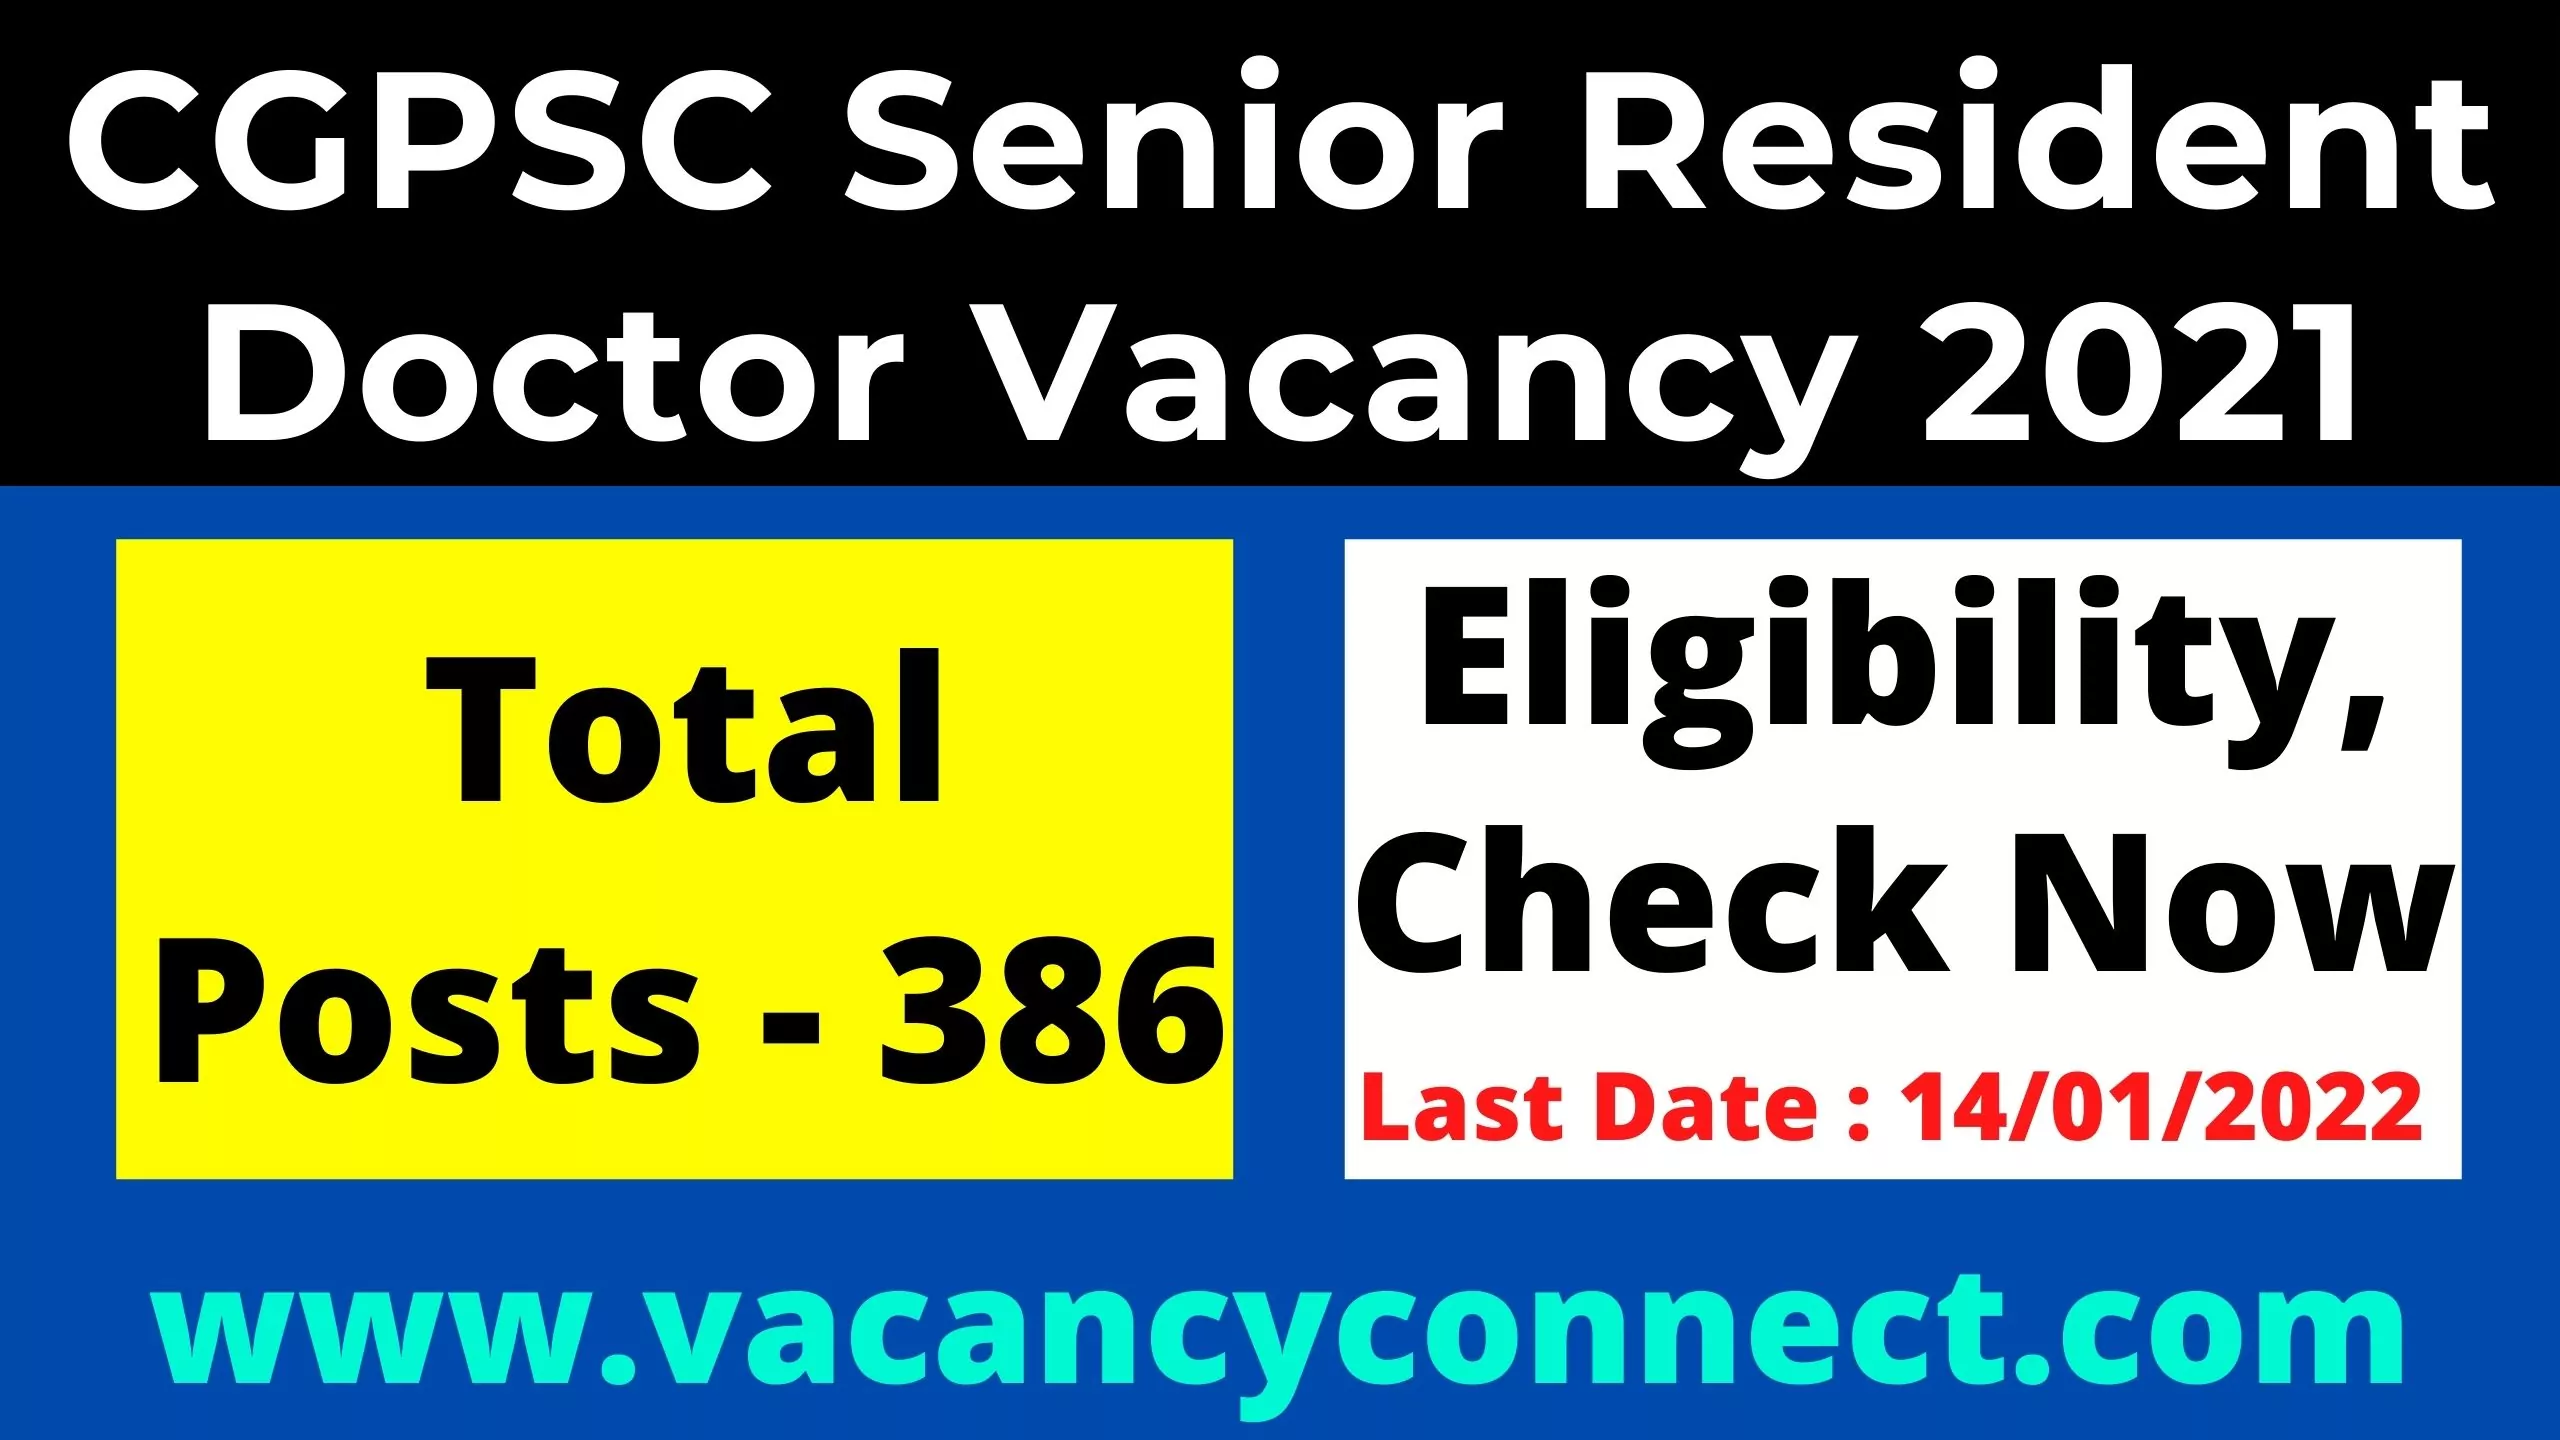 CGPSC Senior Resident Doctor Vacancy 2021